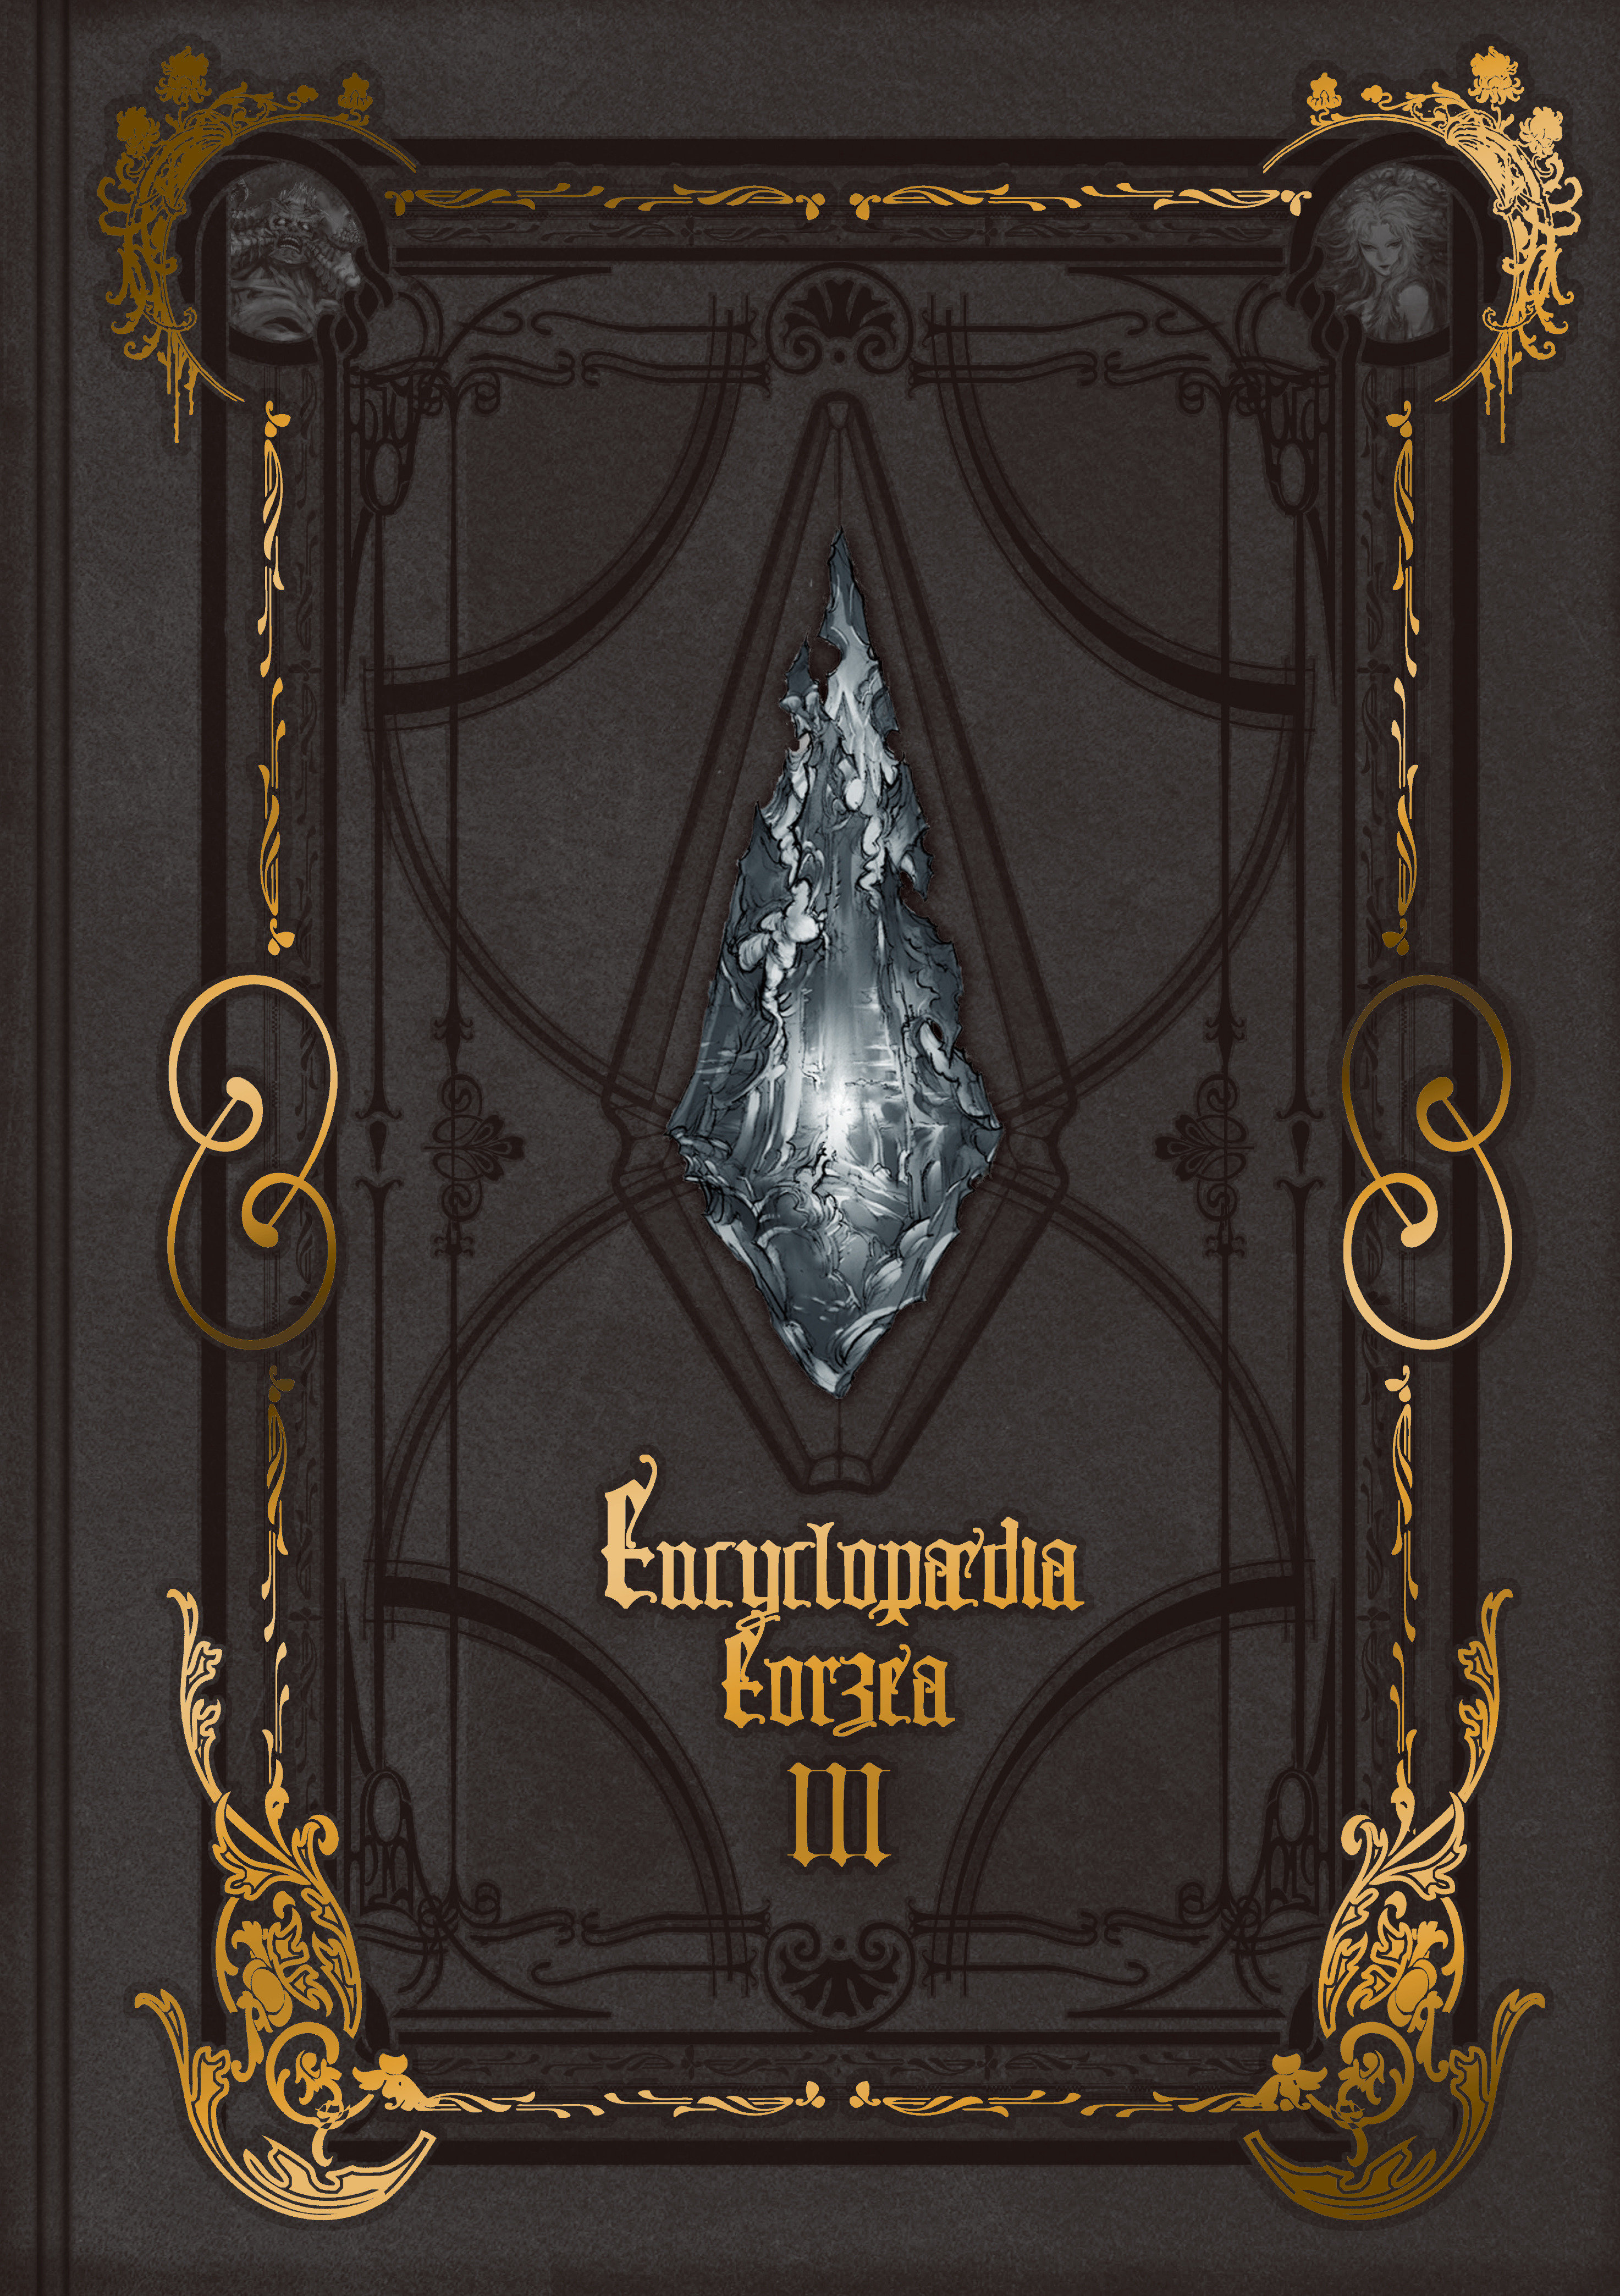 Encyclopaedia Eorzea World of Final Fantasy Xiv Hardcover Volume 3